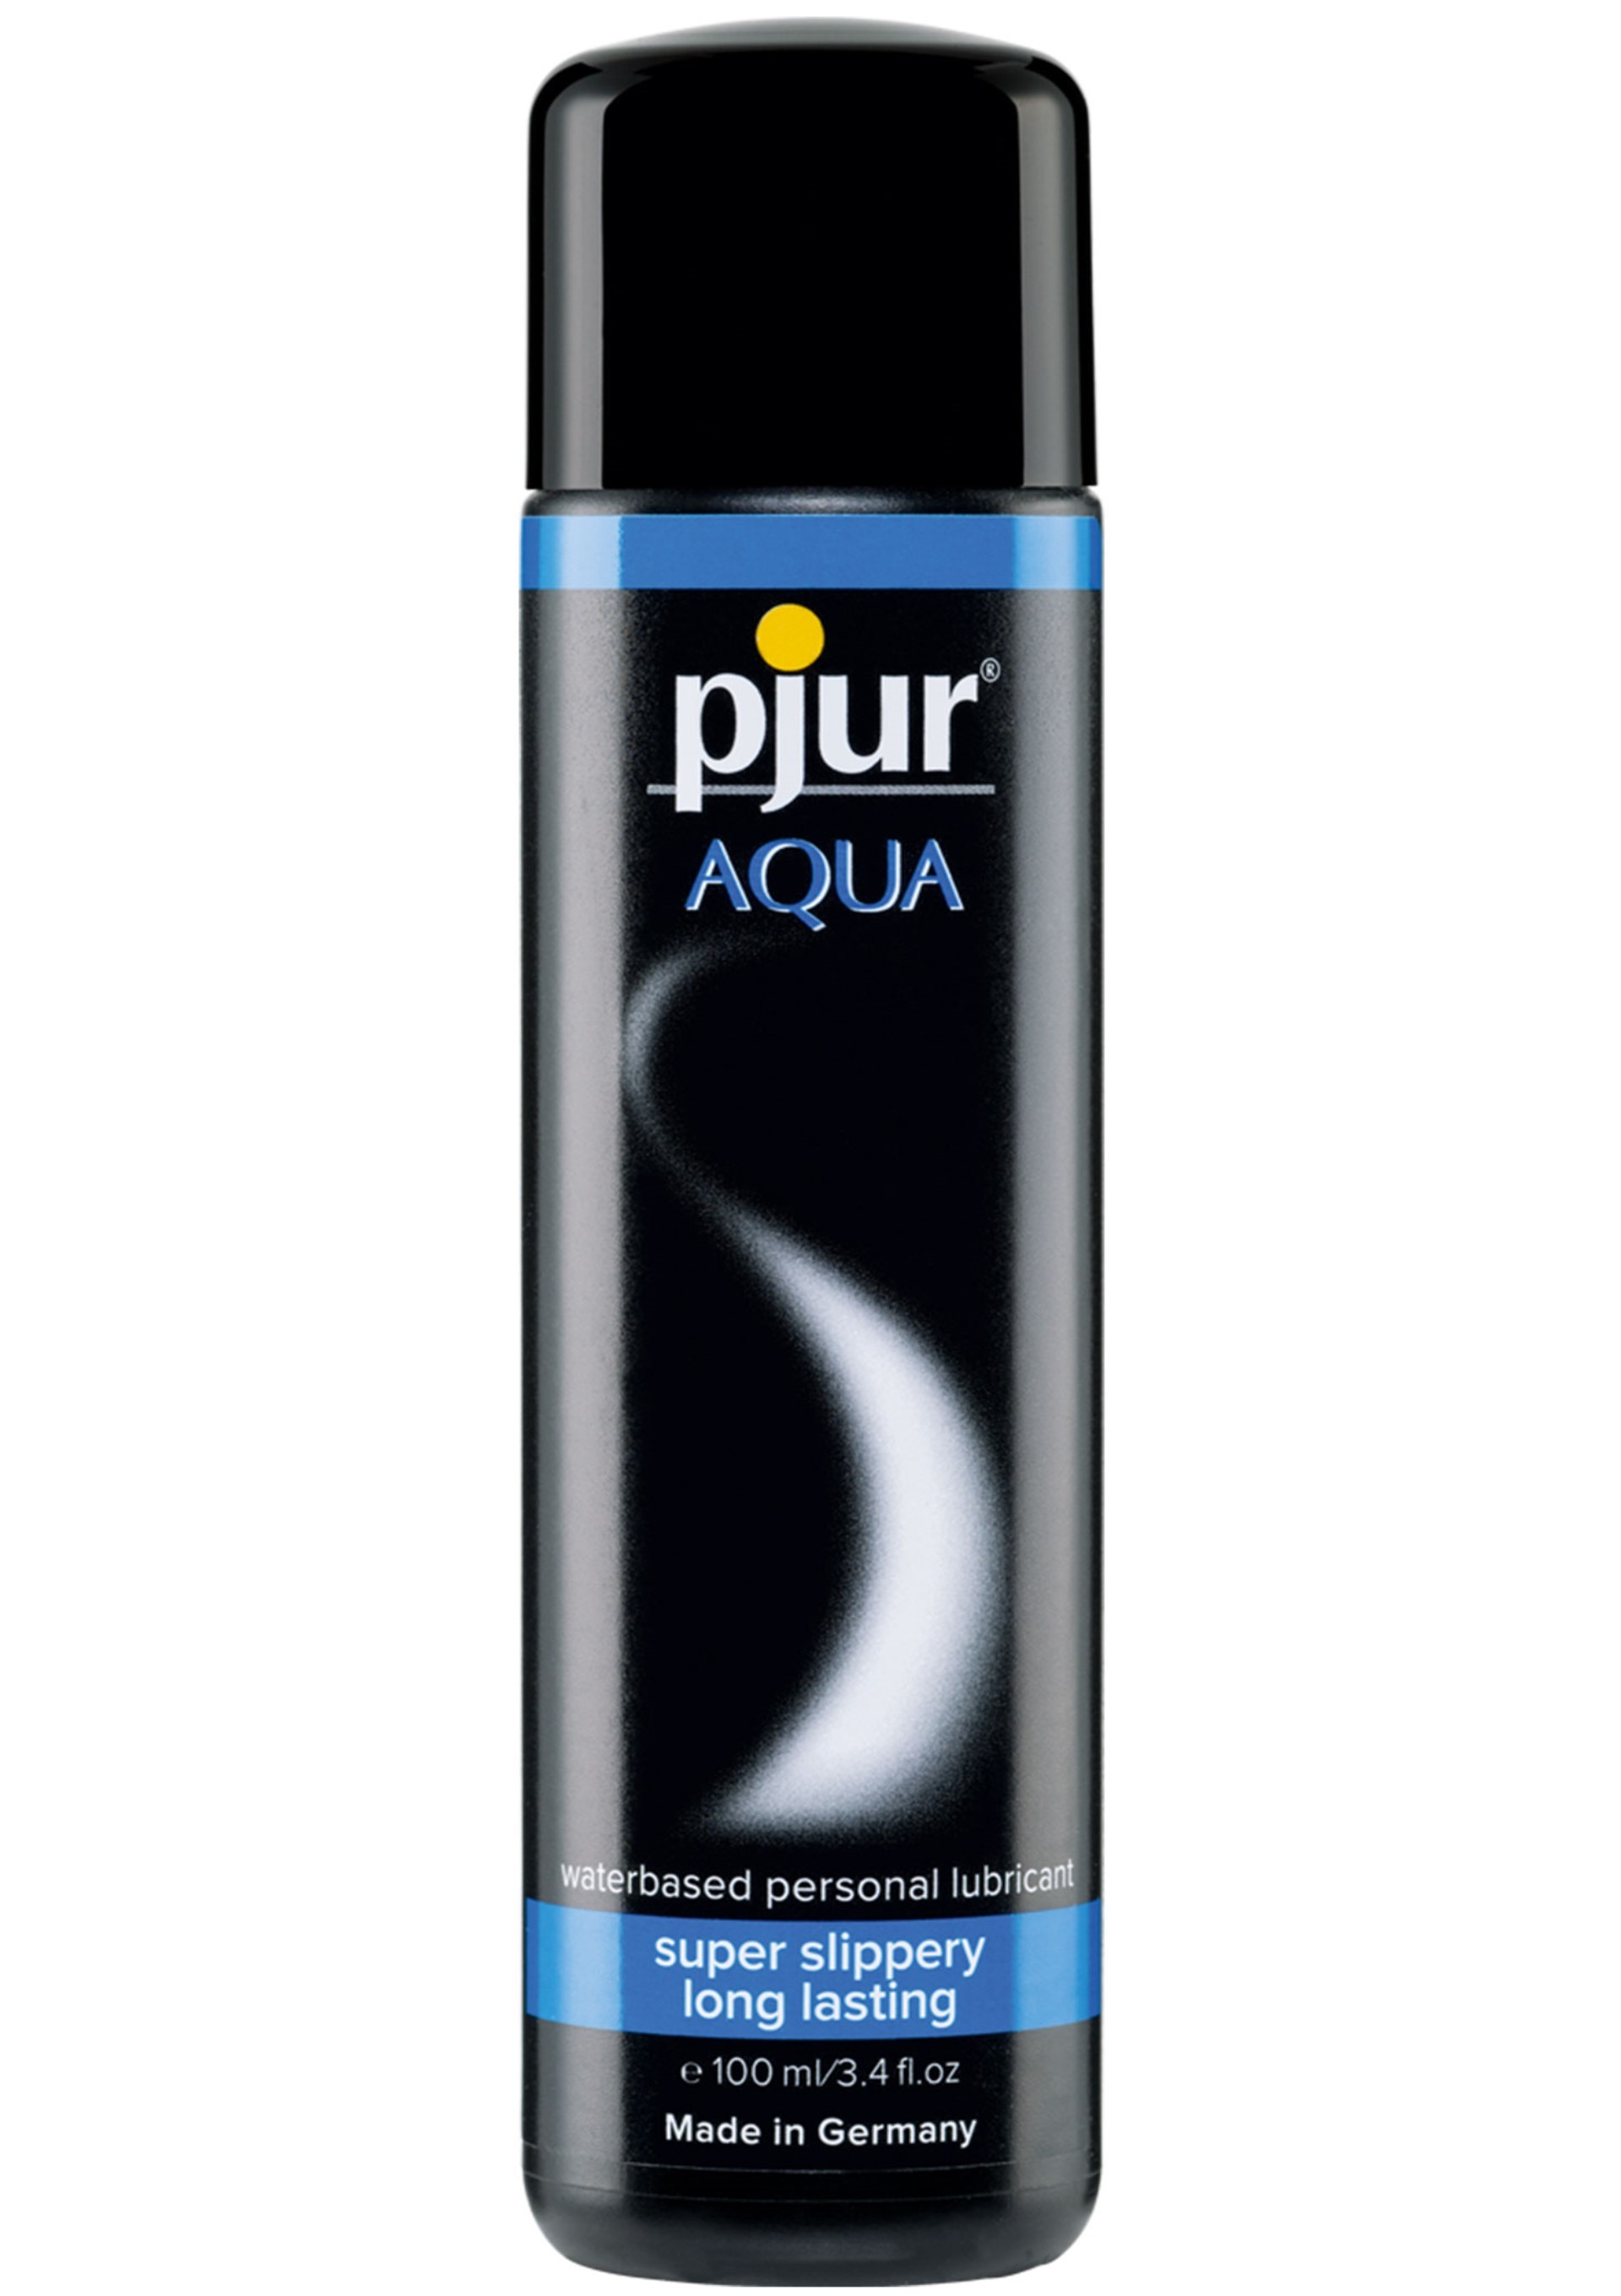 Pjur Aqua Su Bazlı Kayganlaştırıcı Jel 100 ml